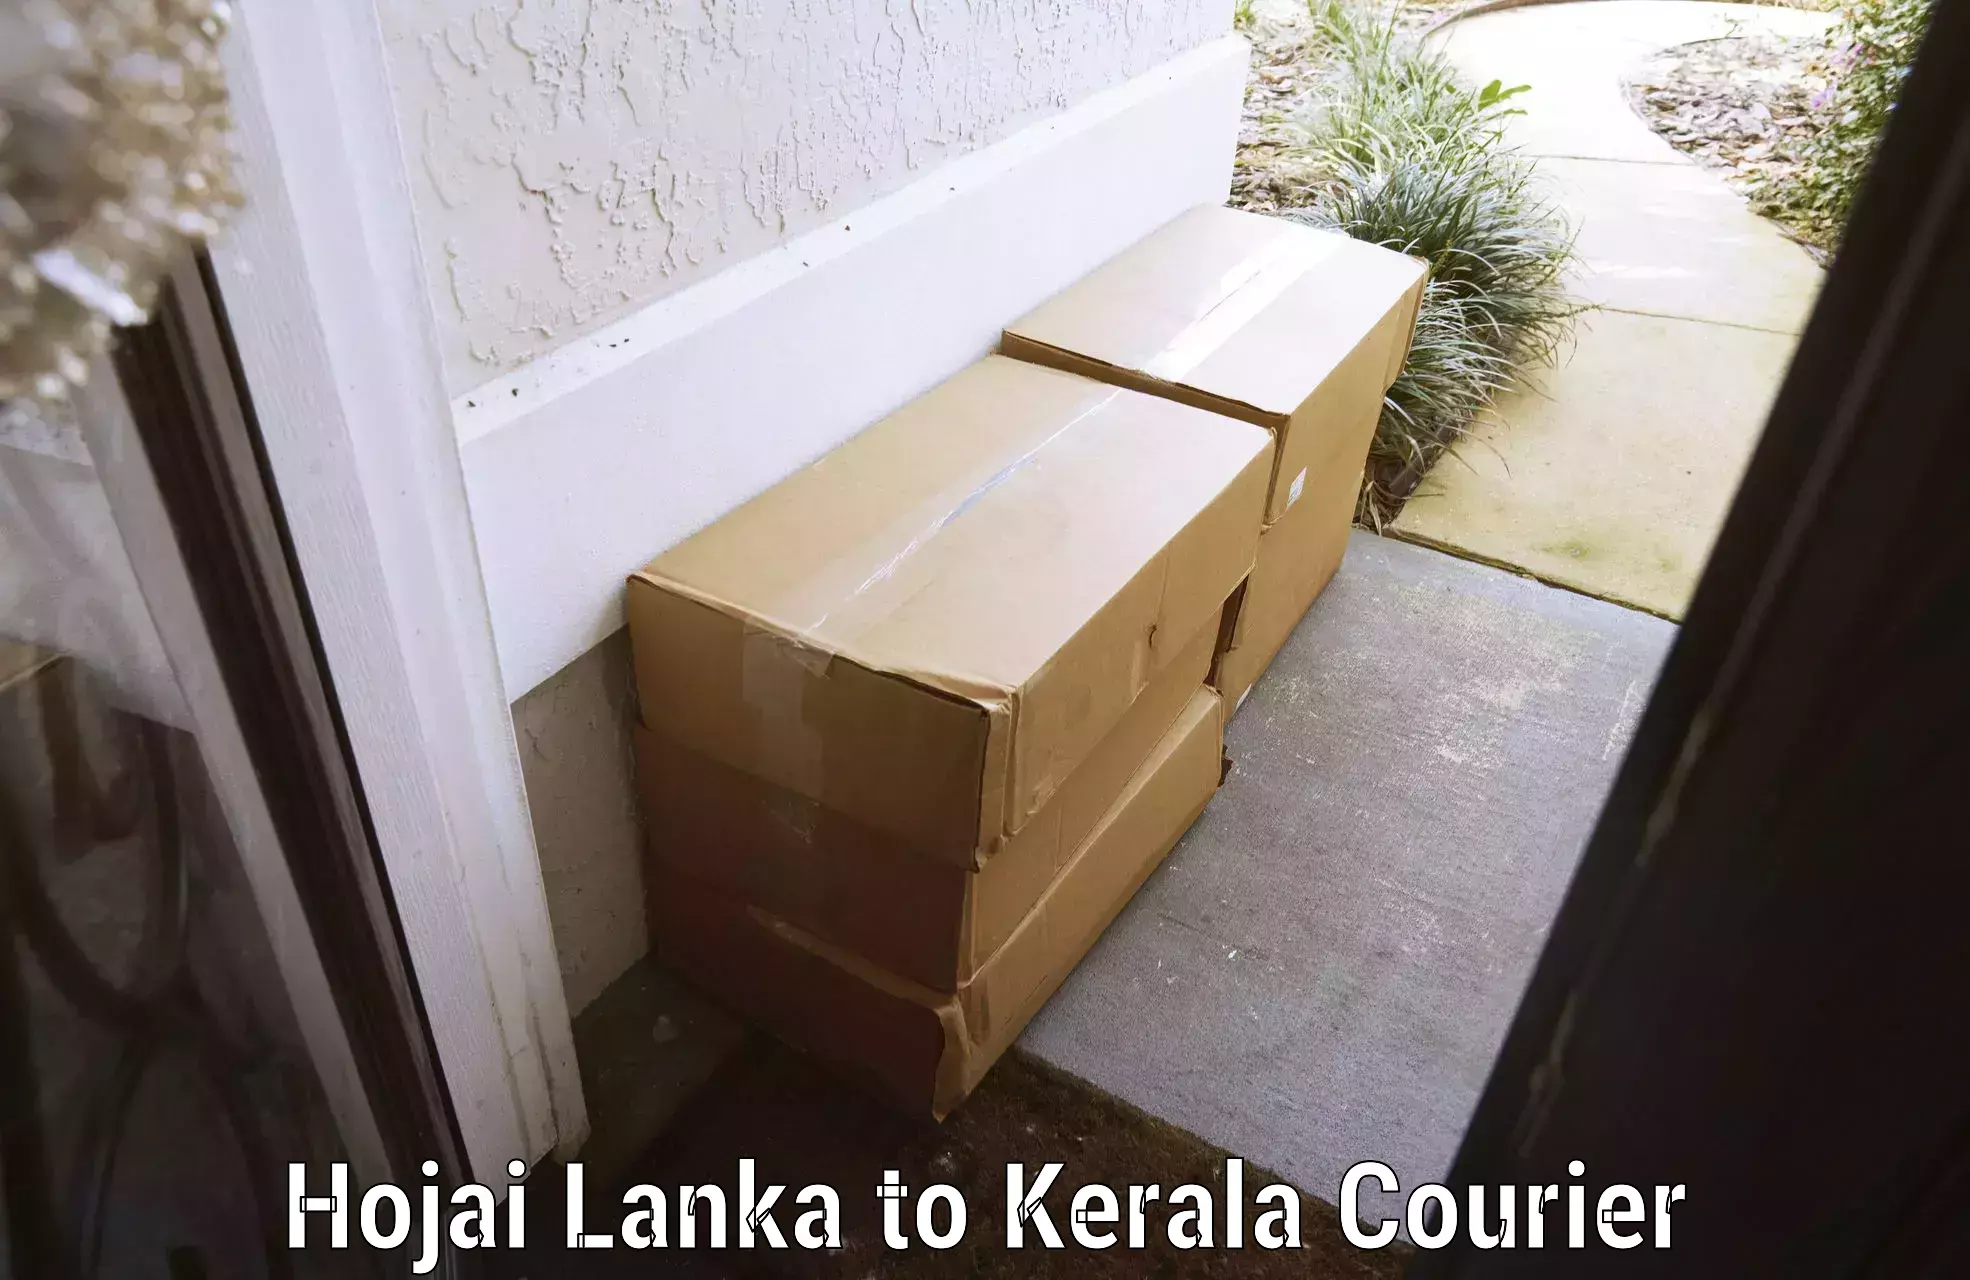 Baggage shipping service Hojai Lanka to Kerala